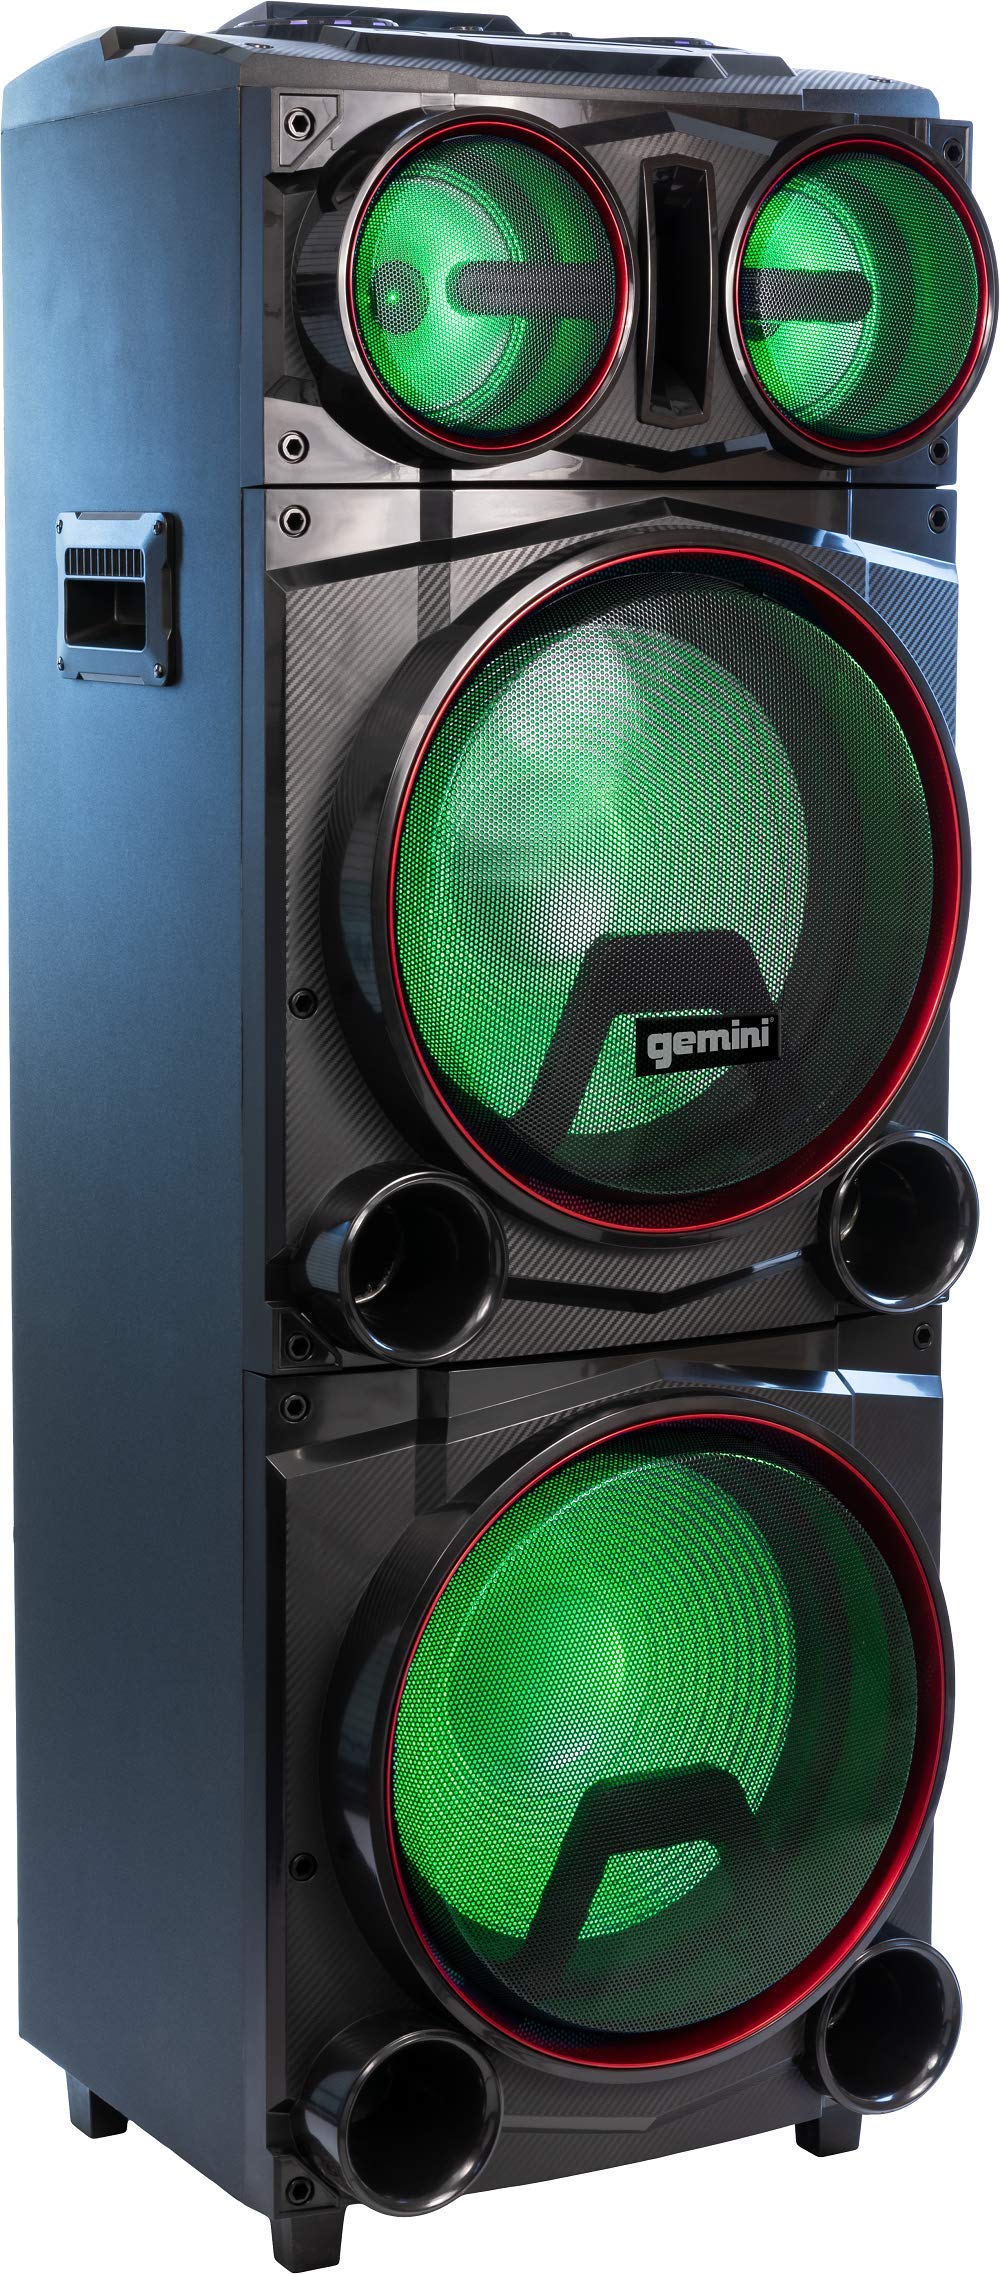  Gemini Sound GMAX-6000 سهل التعامل مع مصابيح LED منزلية للحفلات نظام صوتي 6000 وات واتس مزدوج 15 بوصة مكبر صوت برج كاريوكي...